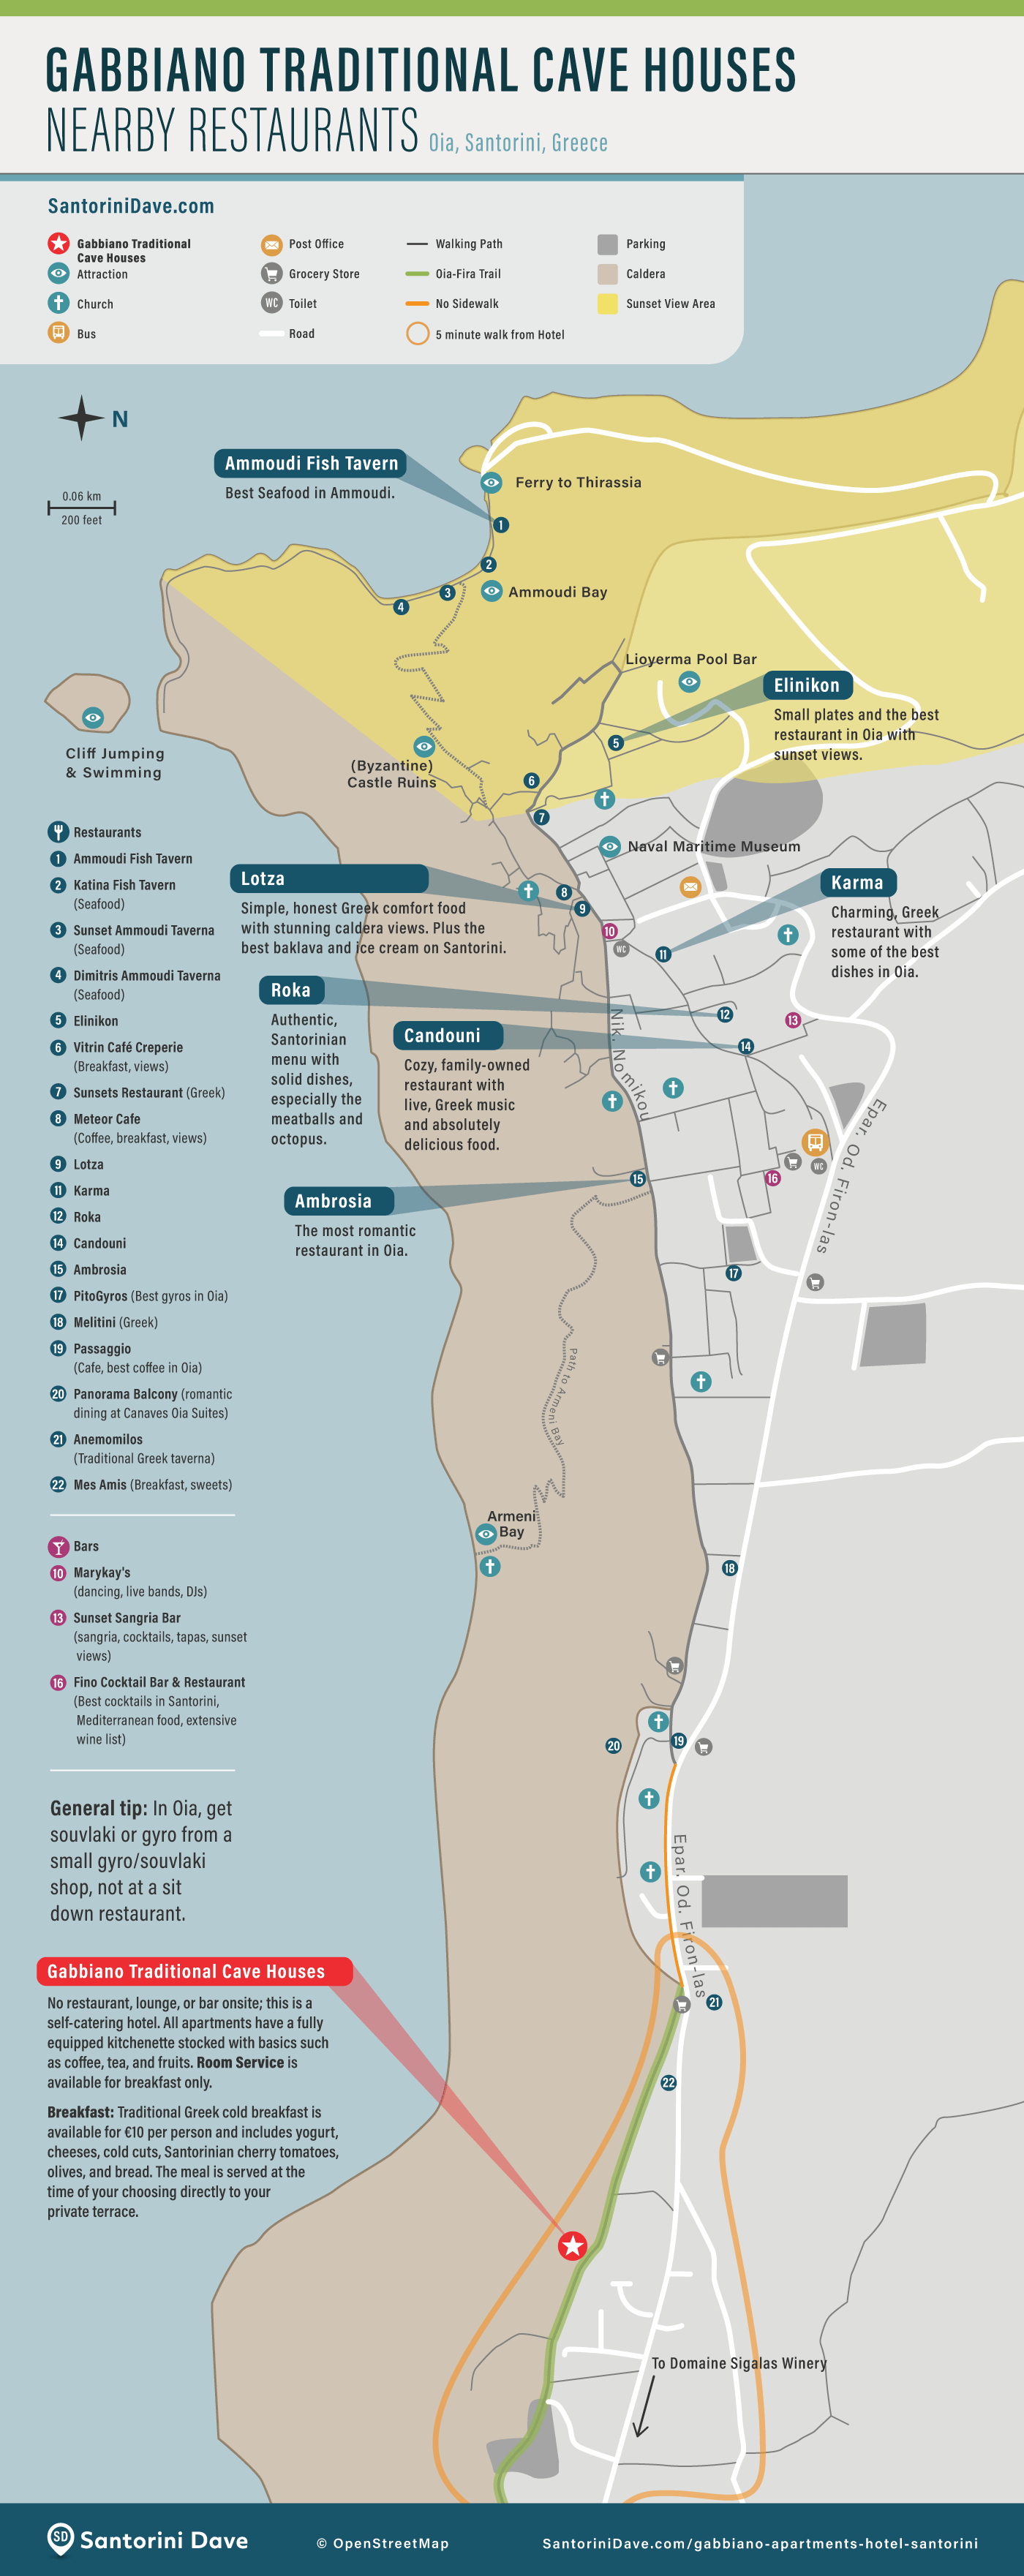 Map of restaurants near Gabbiano Traditional Cave Houses in Oia, Santorini